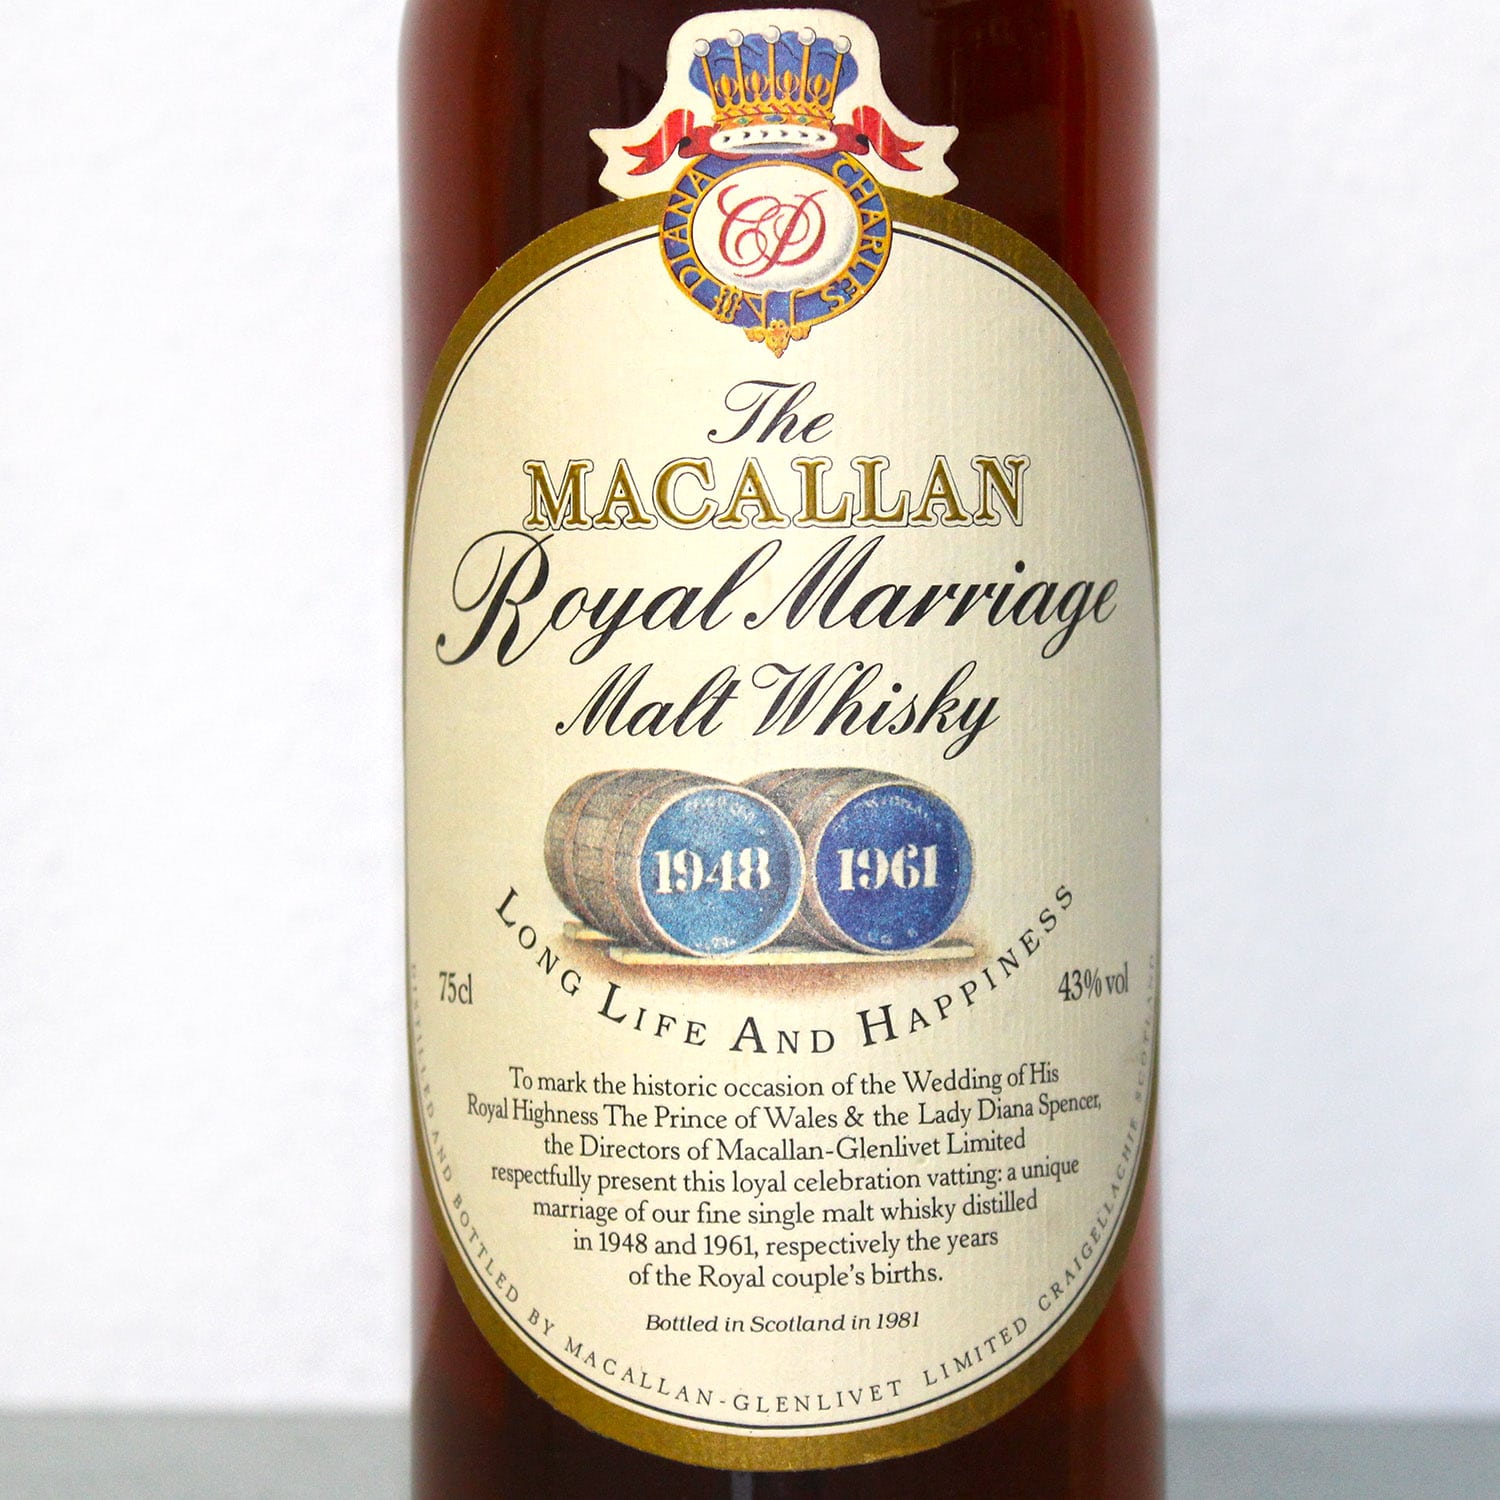 Macallan 1948 Royal Marriage label